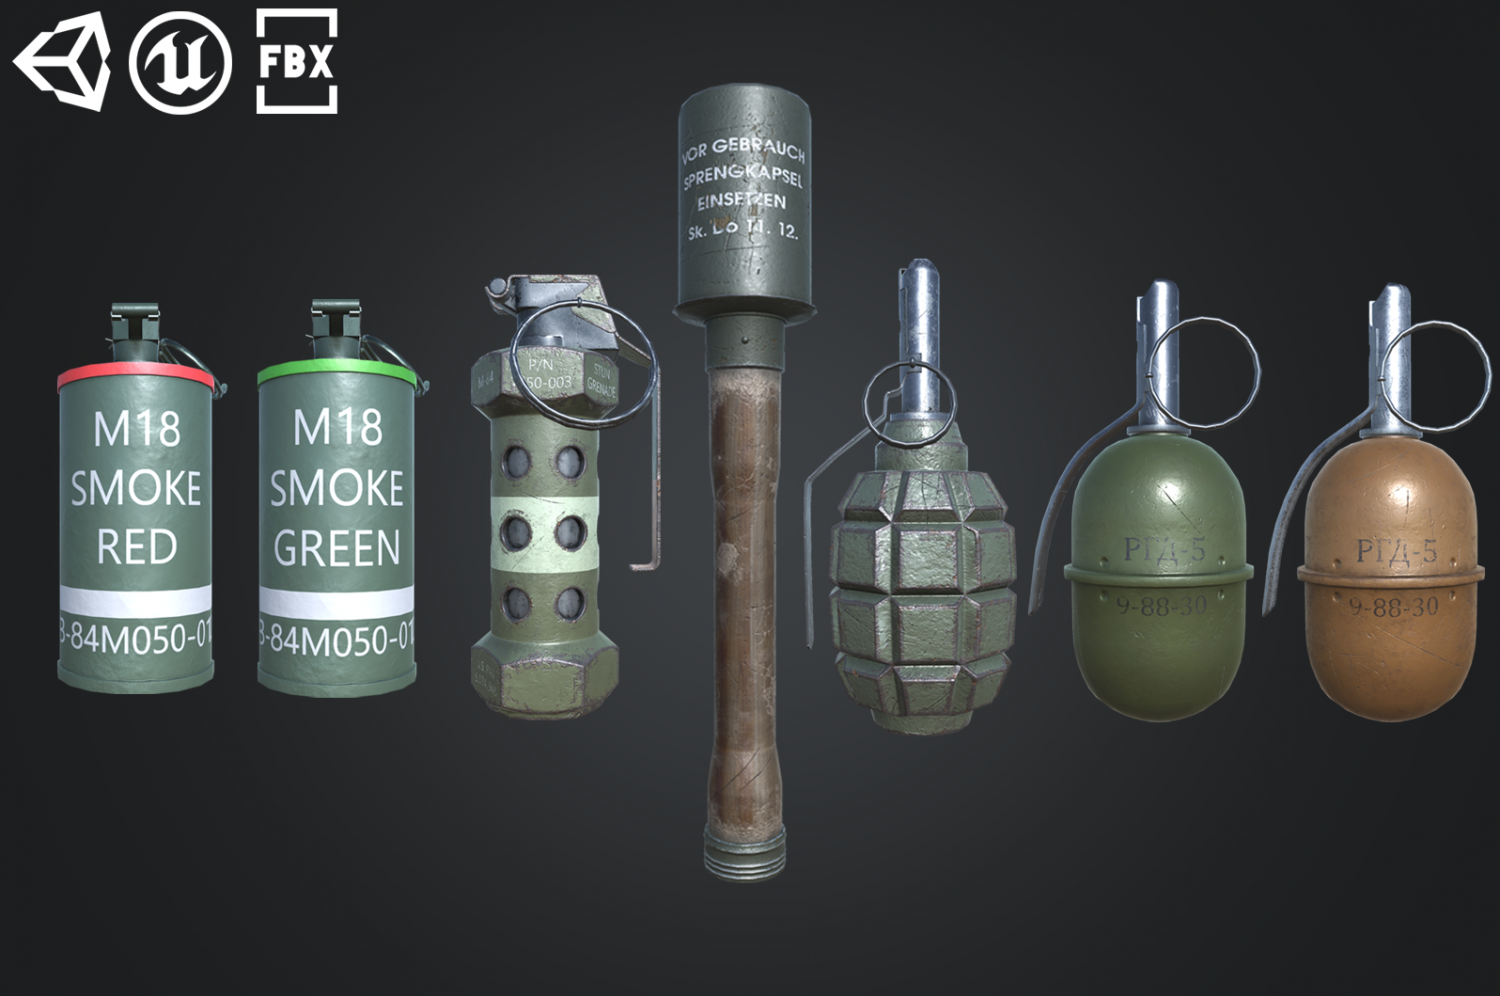 Grenade Explosion Effect Pack